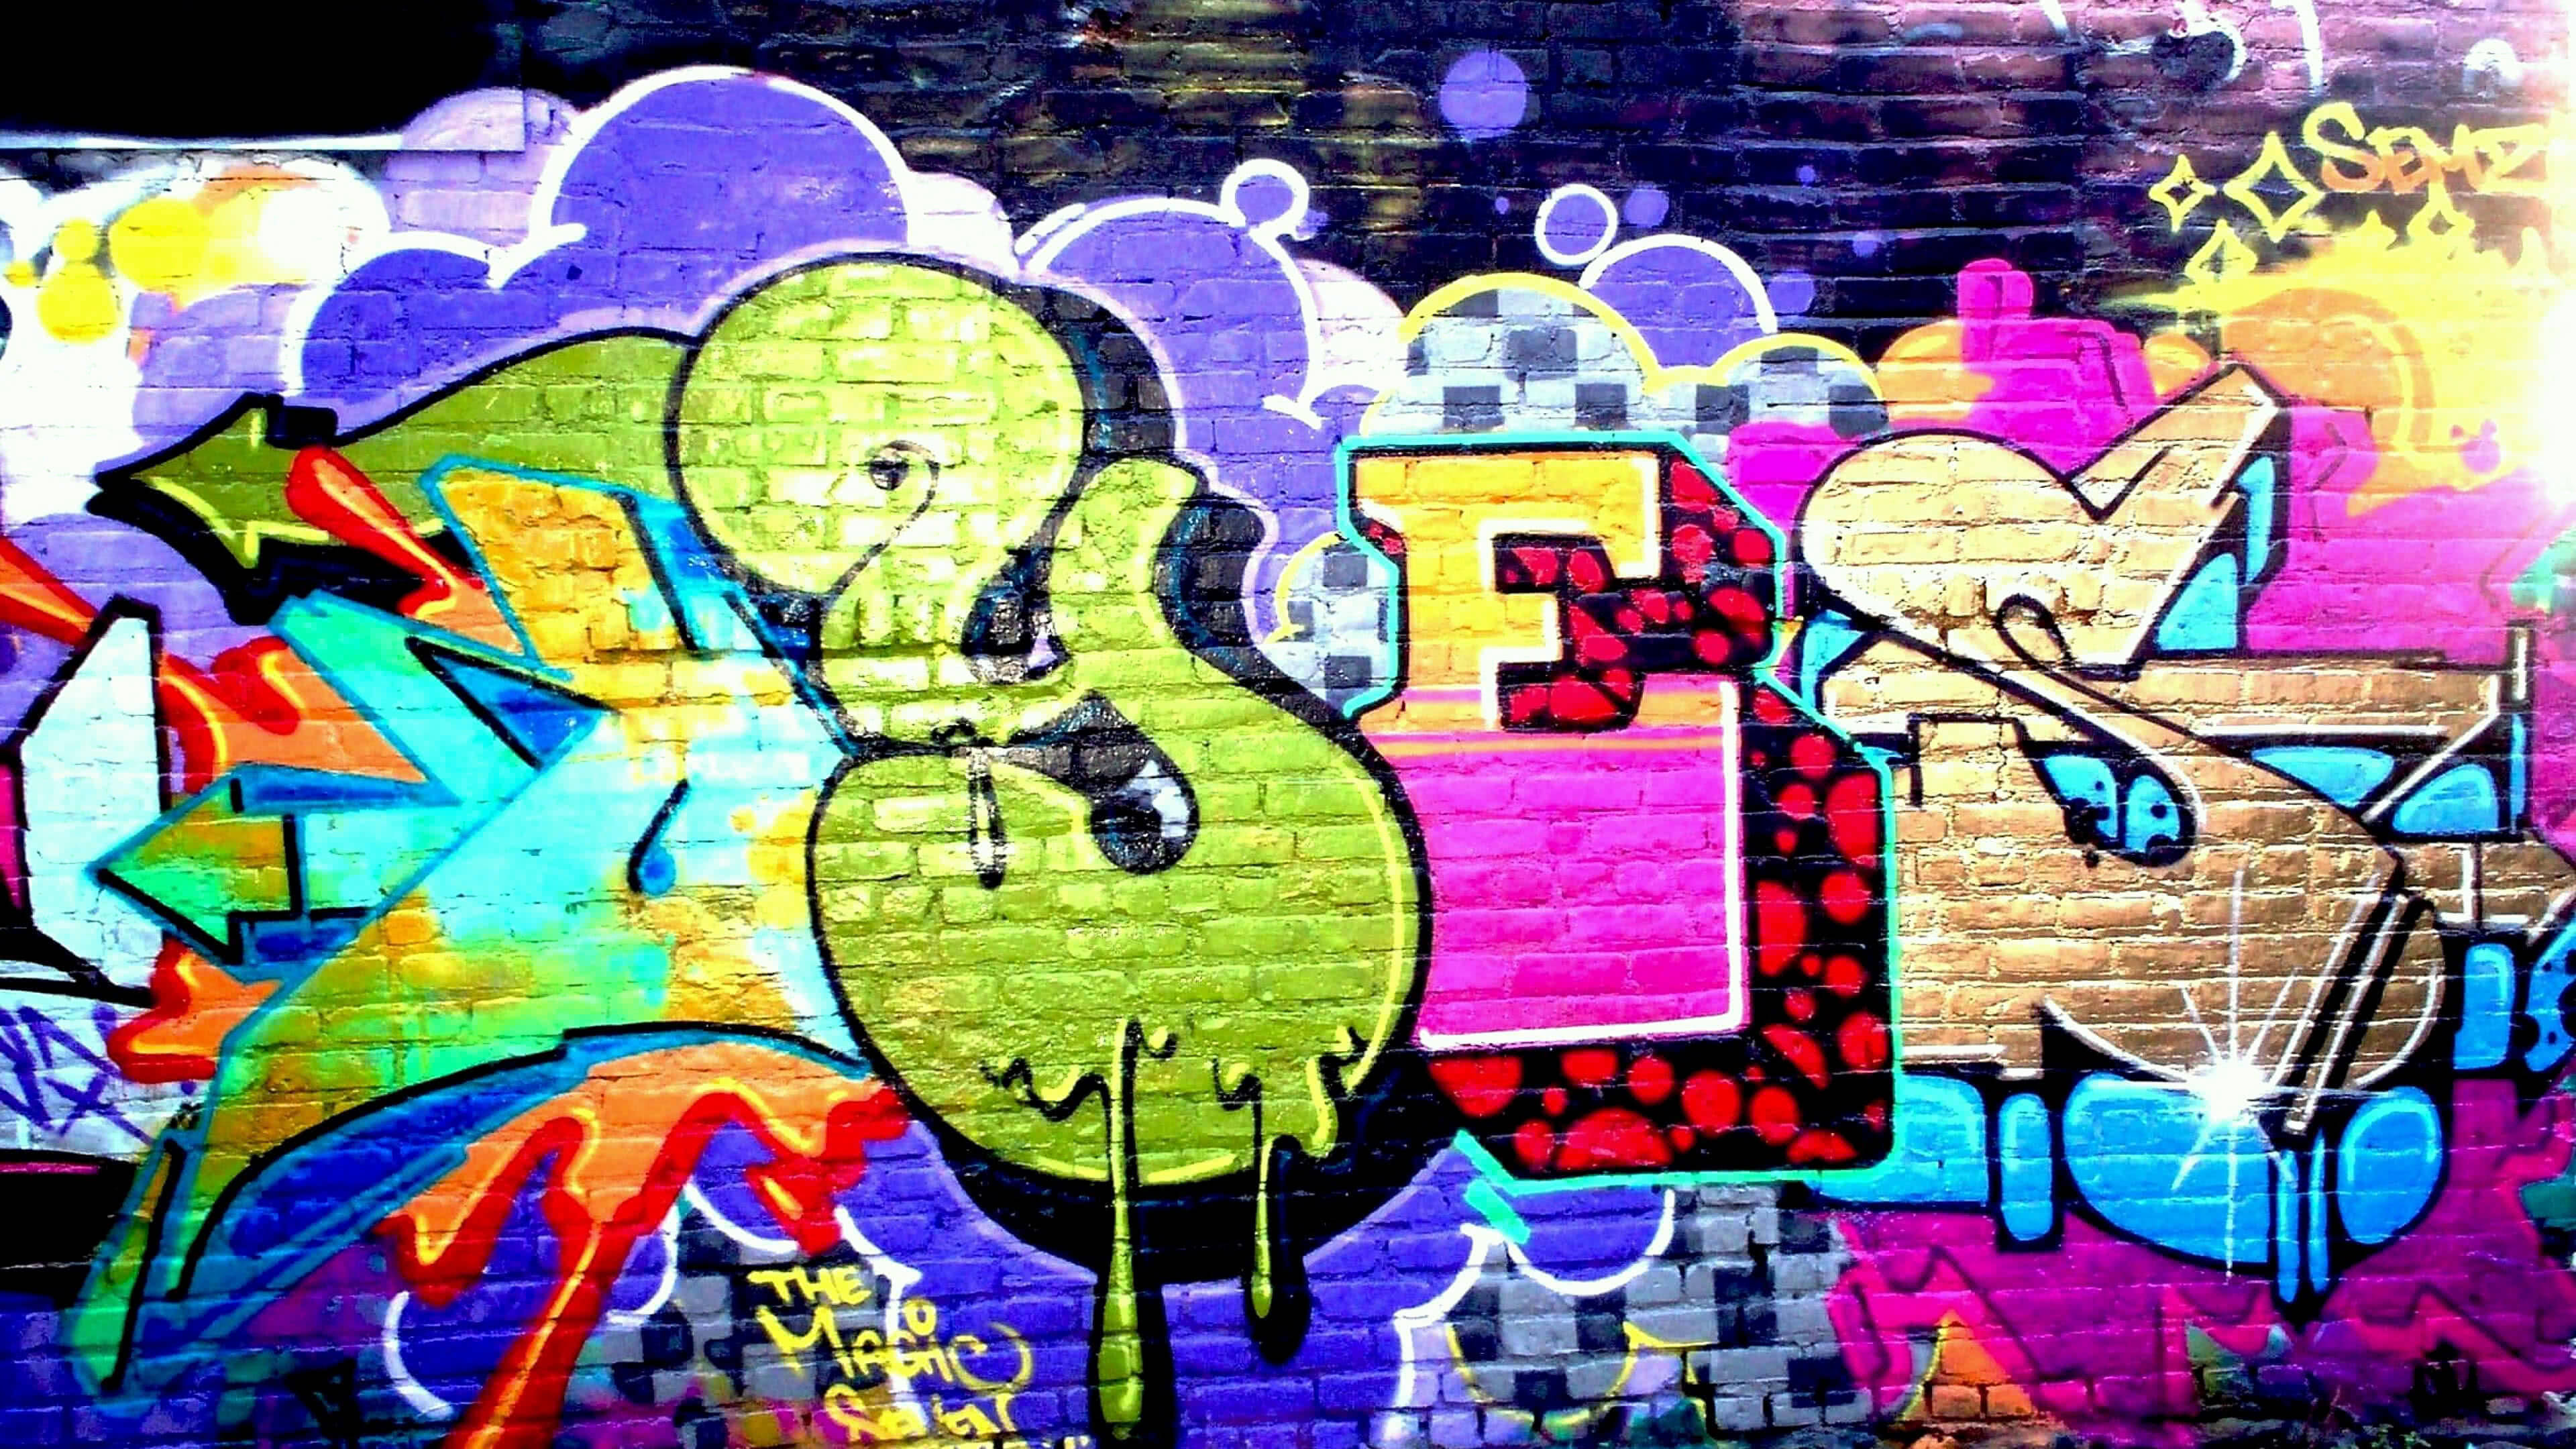 Download Yes Wall Graffiti Art Wallpaper | Wallpapers.com